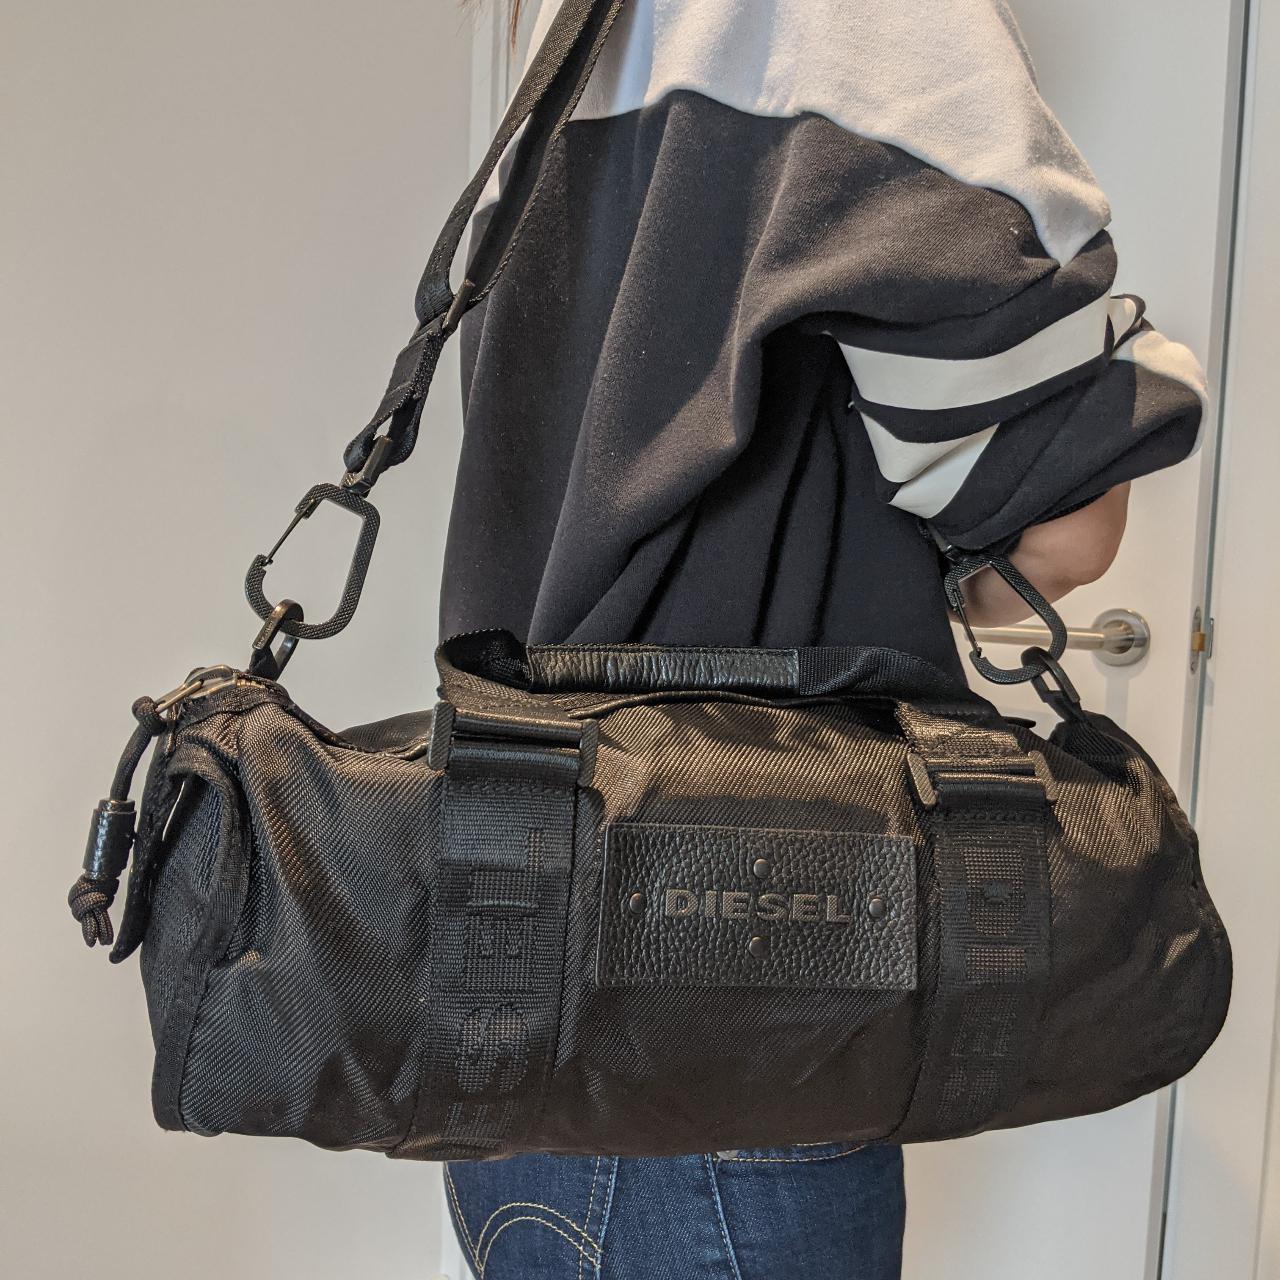 Product Image 1 - Black Diesel handbag with adjustable